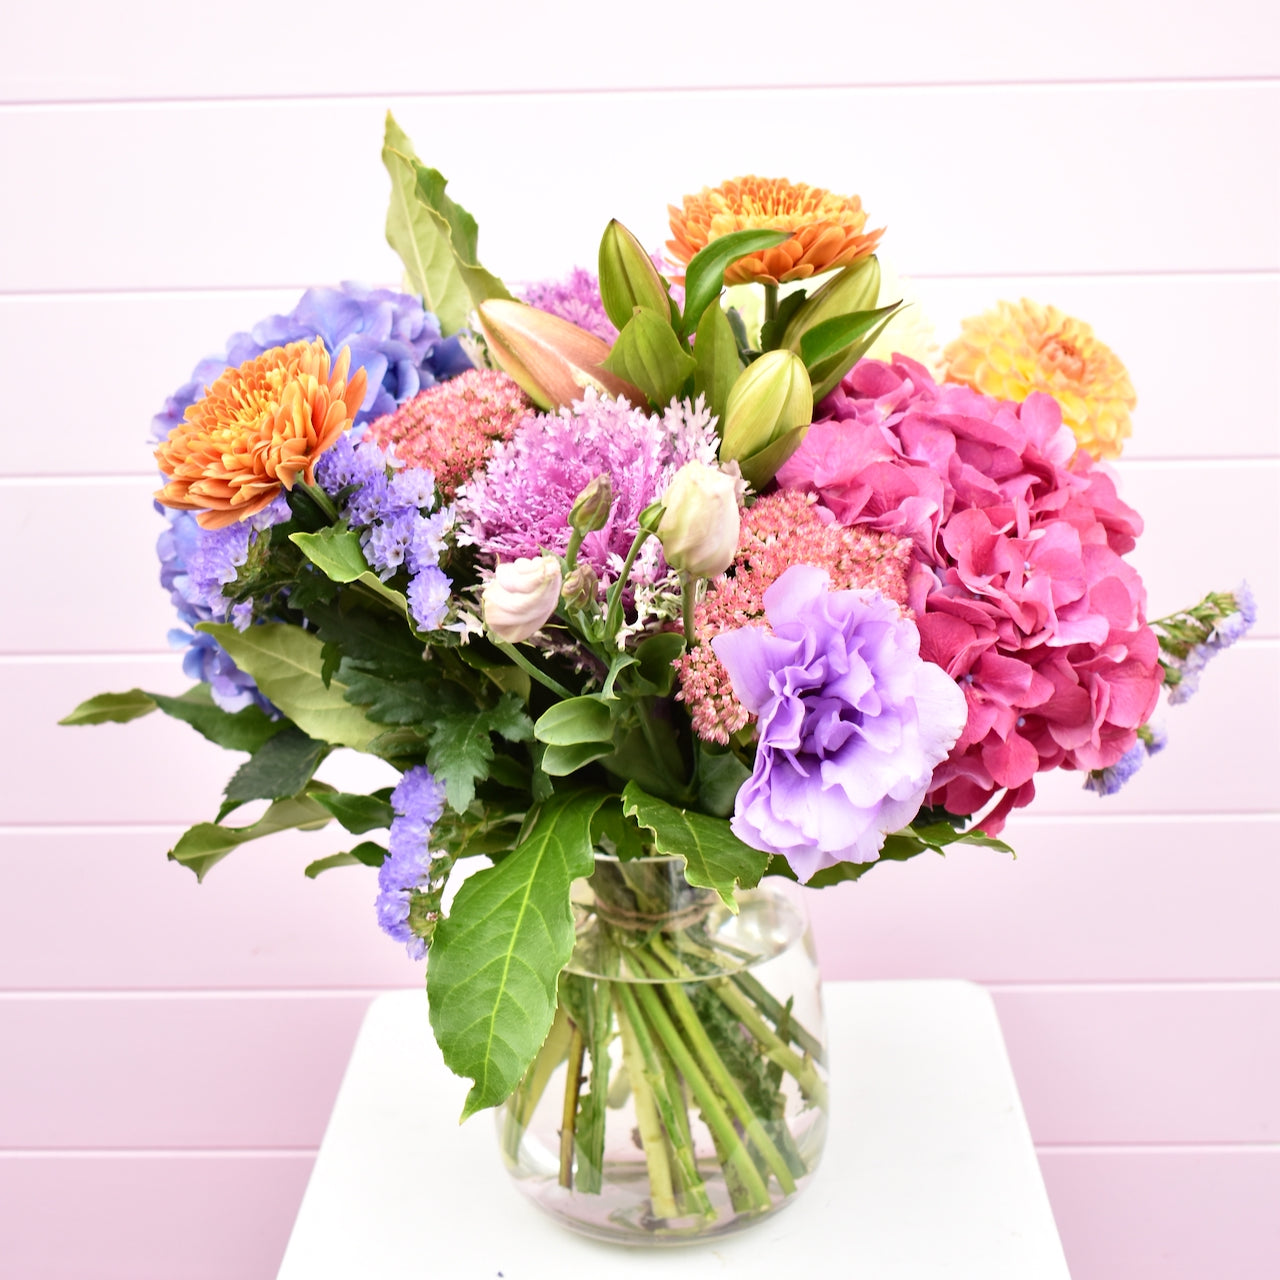 Bright colourful flowers in glass vase. Pink, purple, orange fresh flowers